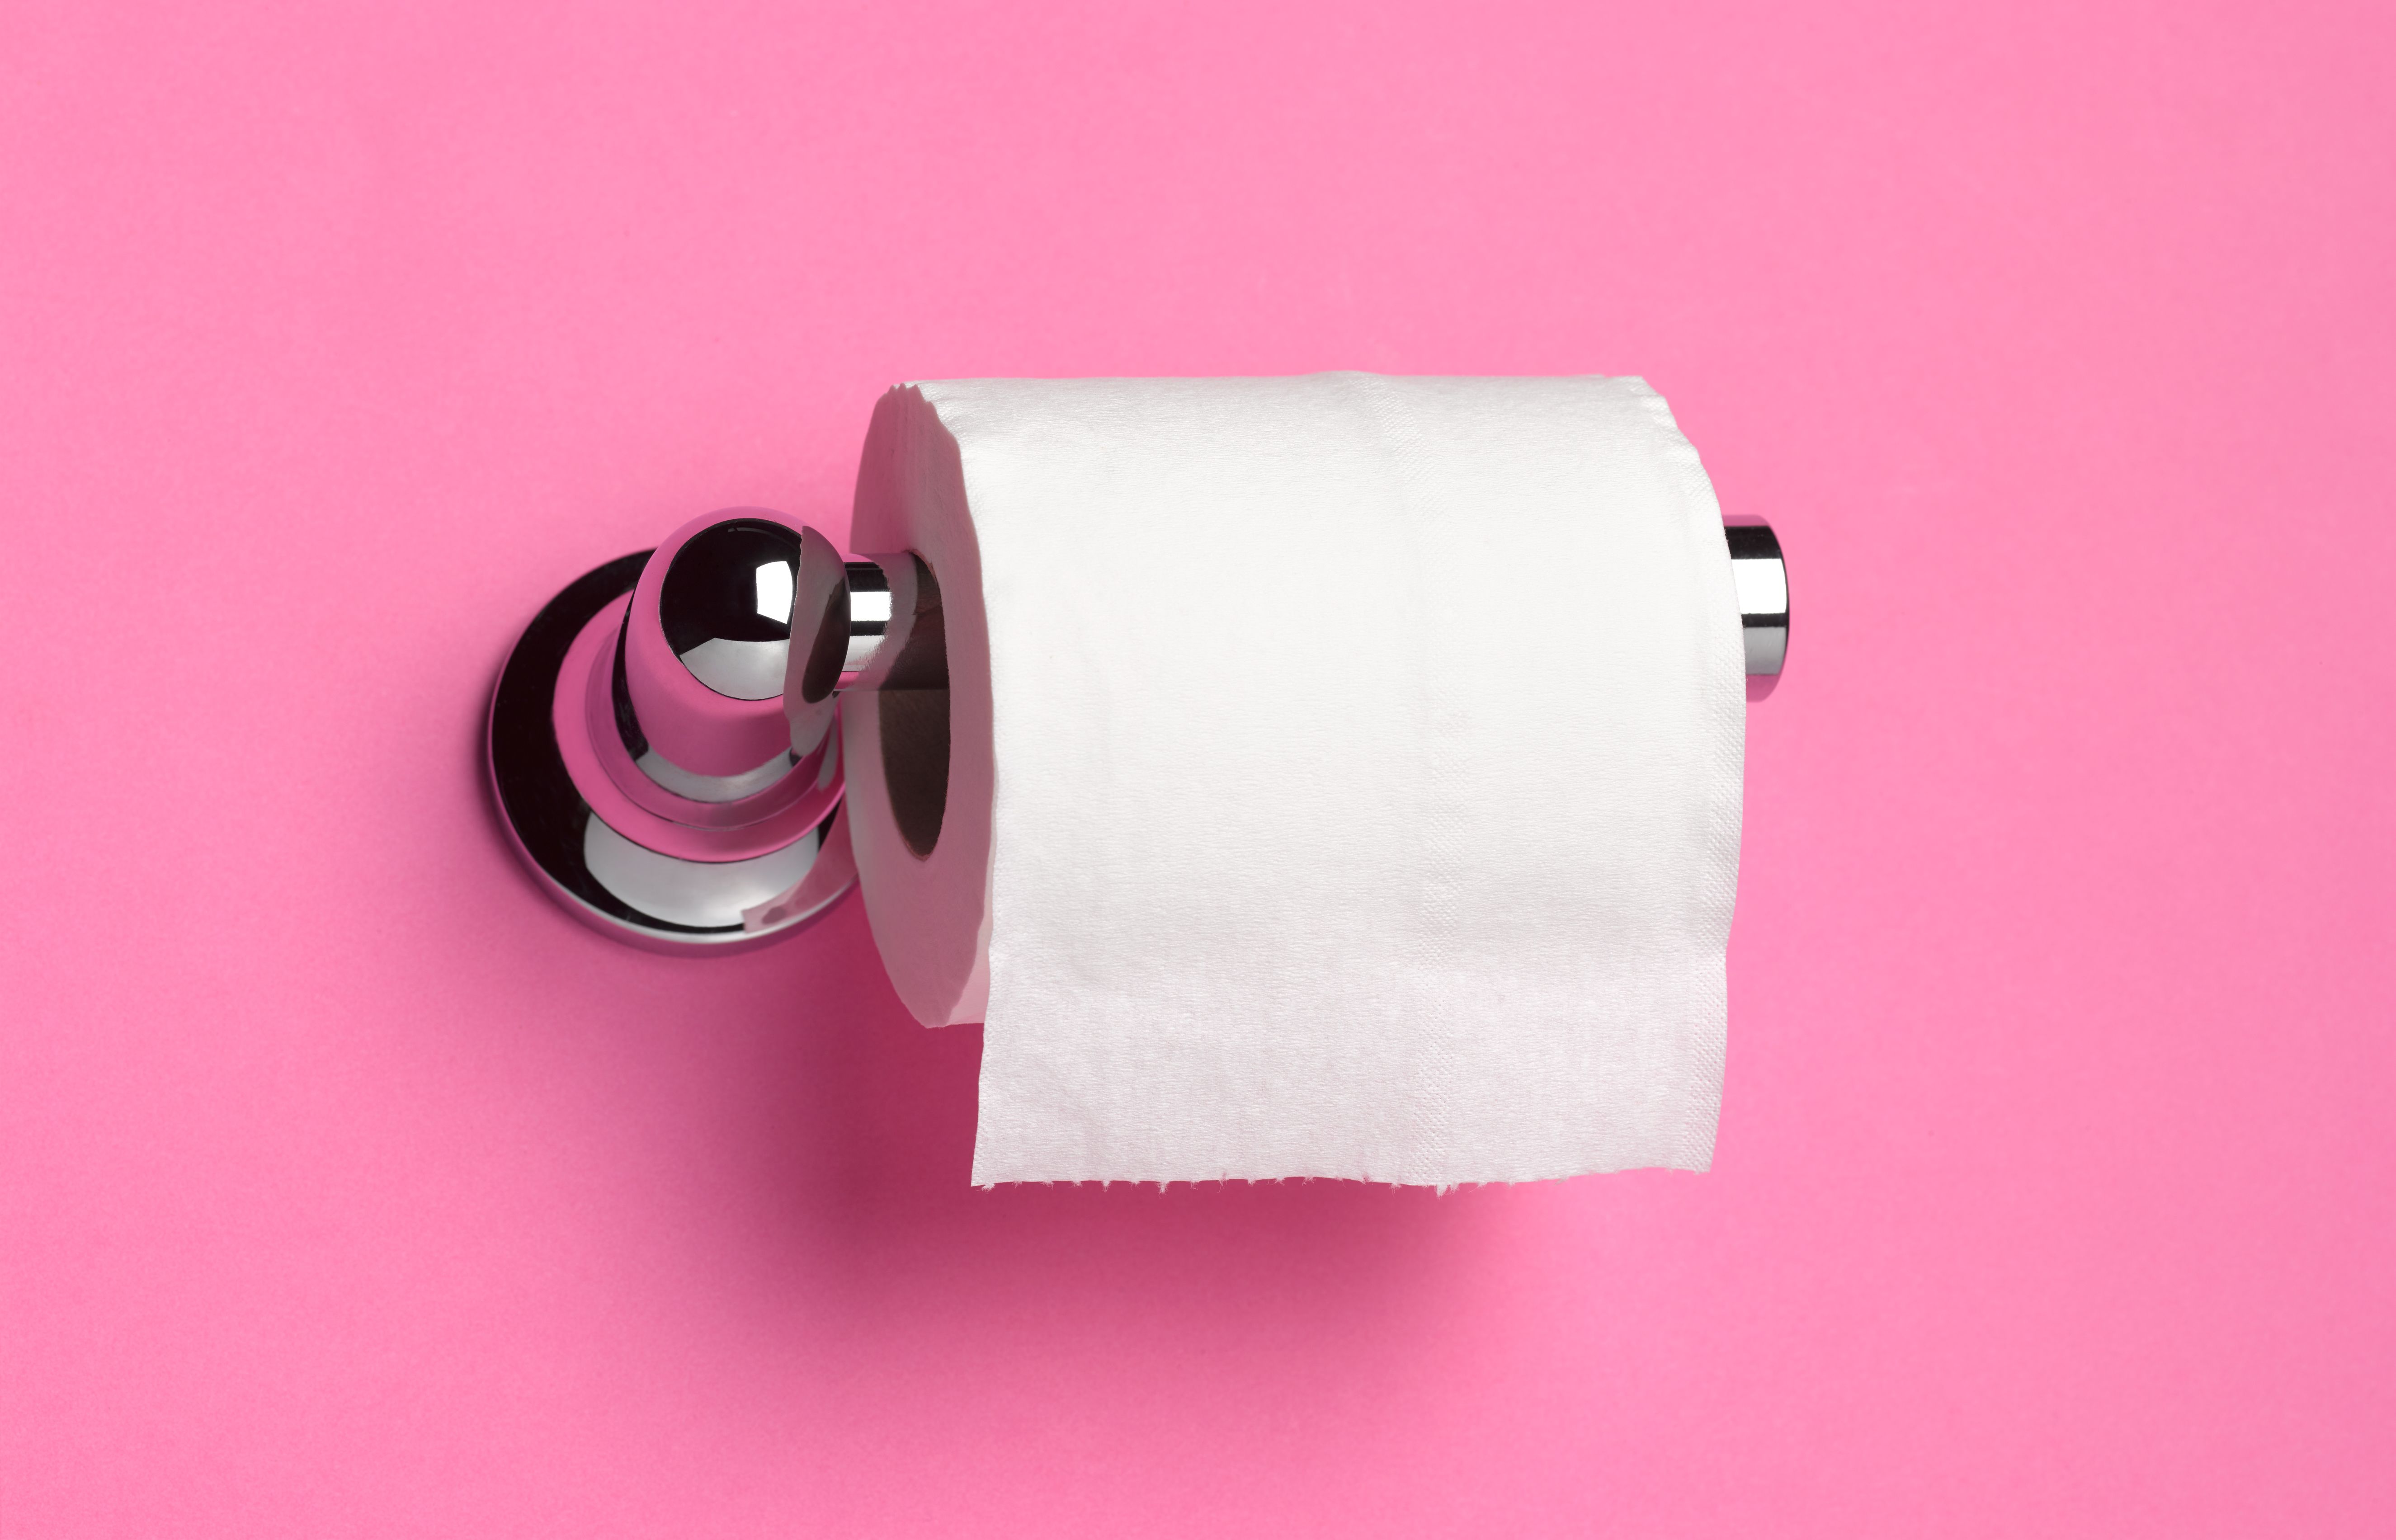 pink toilet roll holder